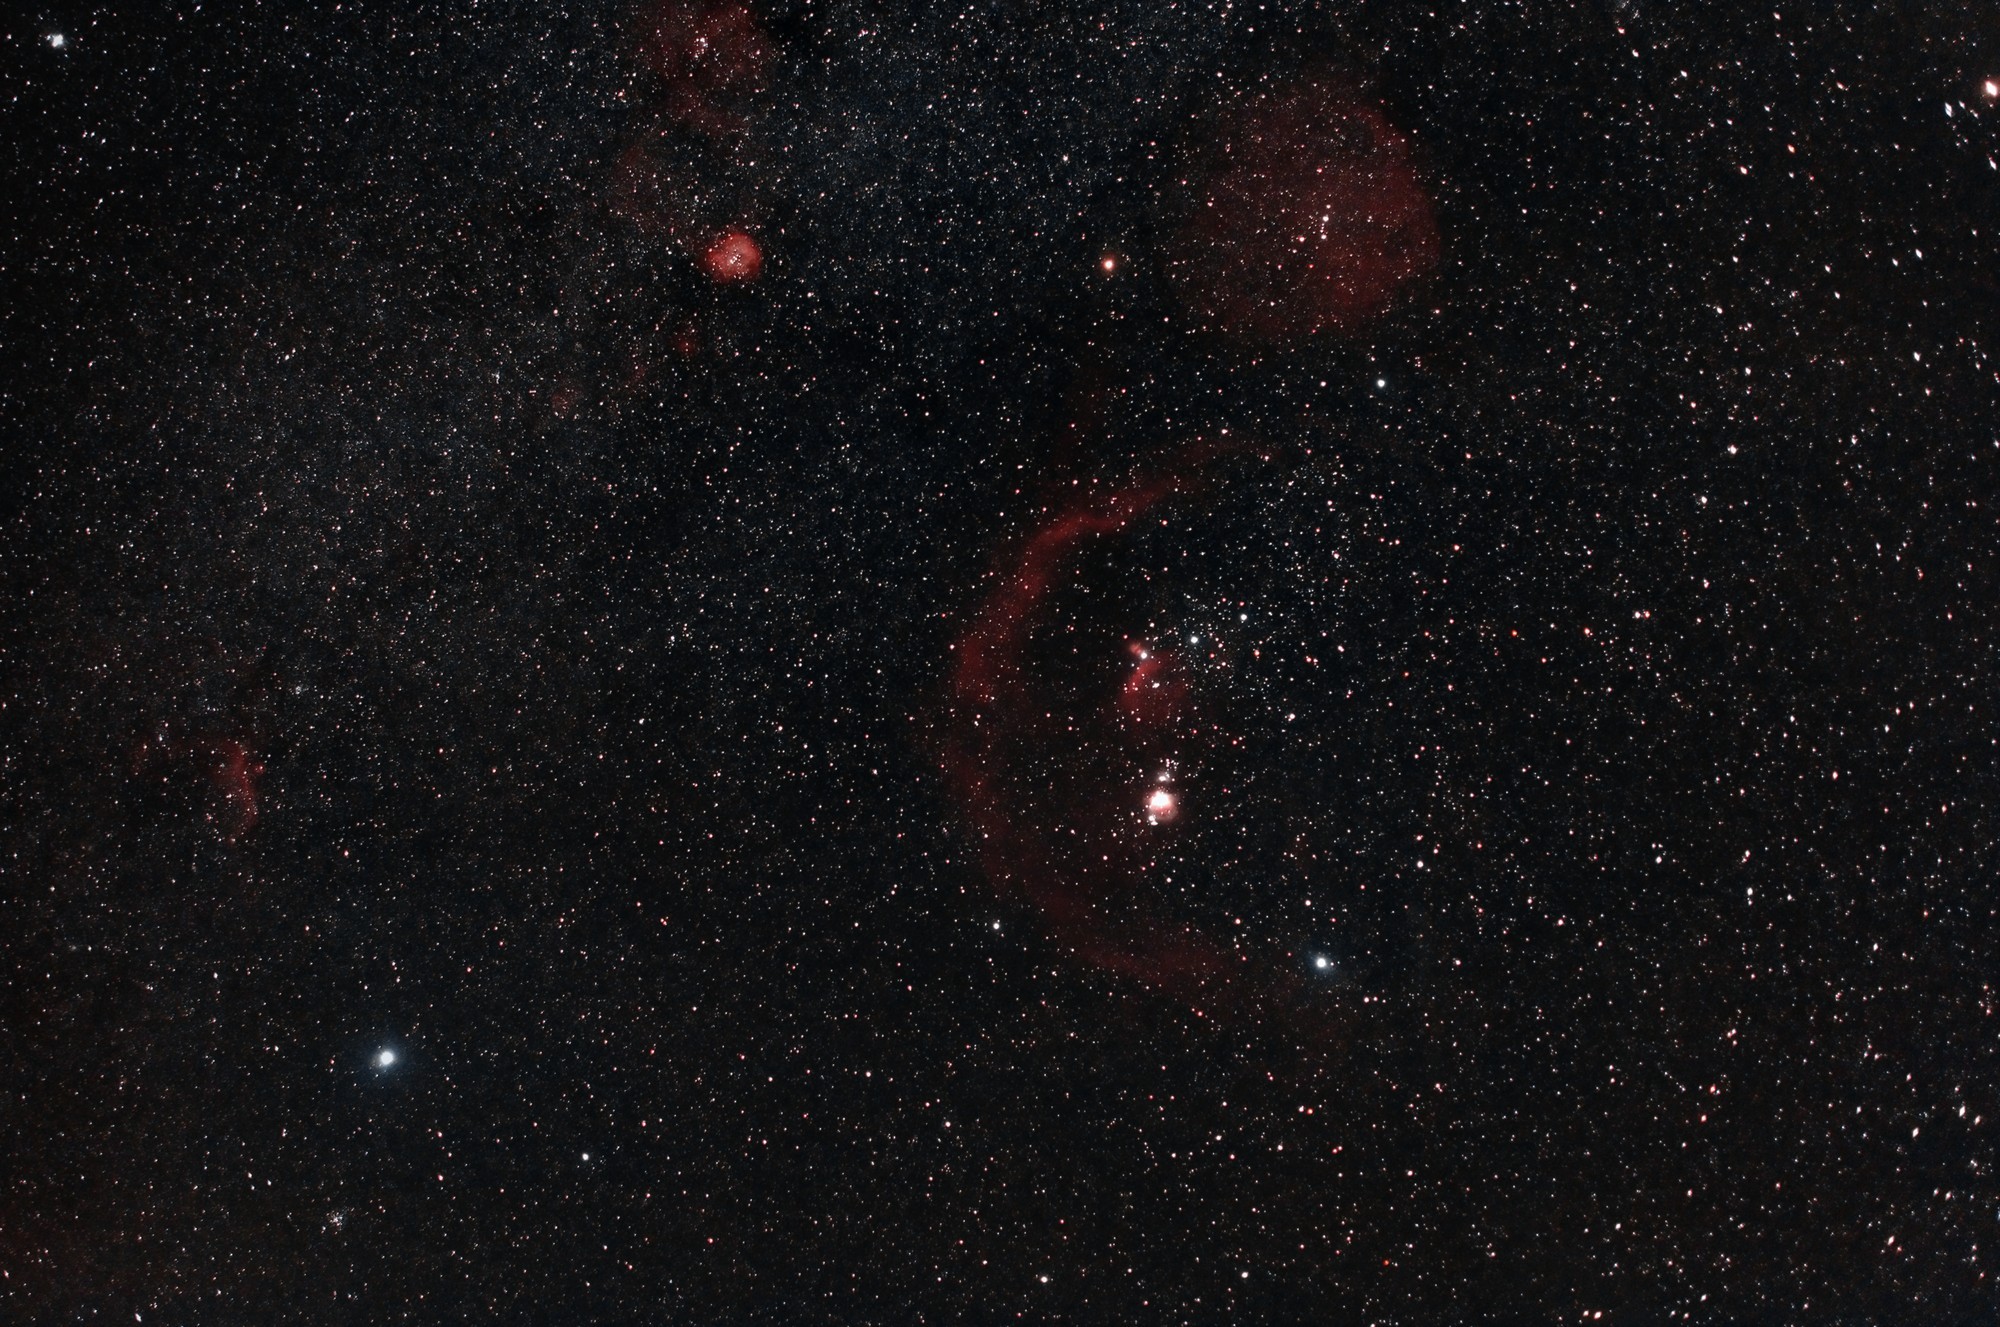 Final-Orion-300s-gx-crop-curve-denoise-hlvg-smallstar-holo-Small.jpg